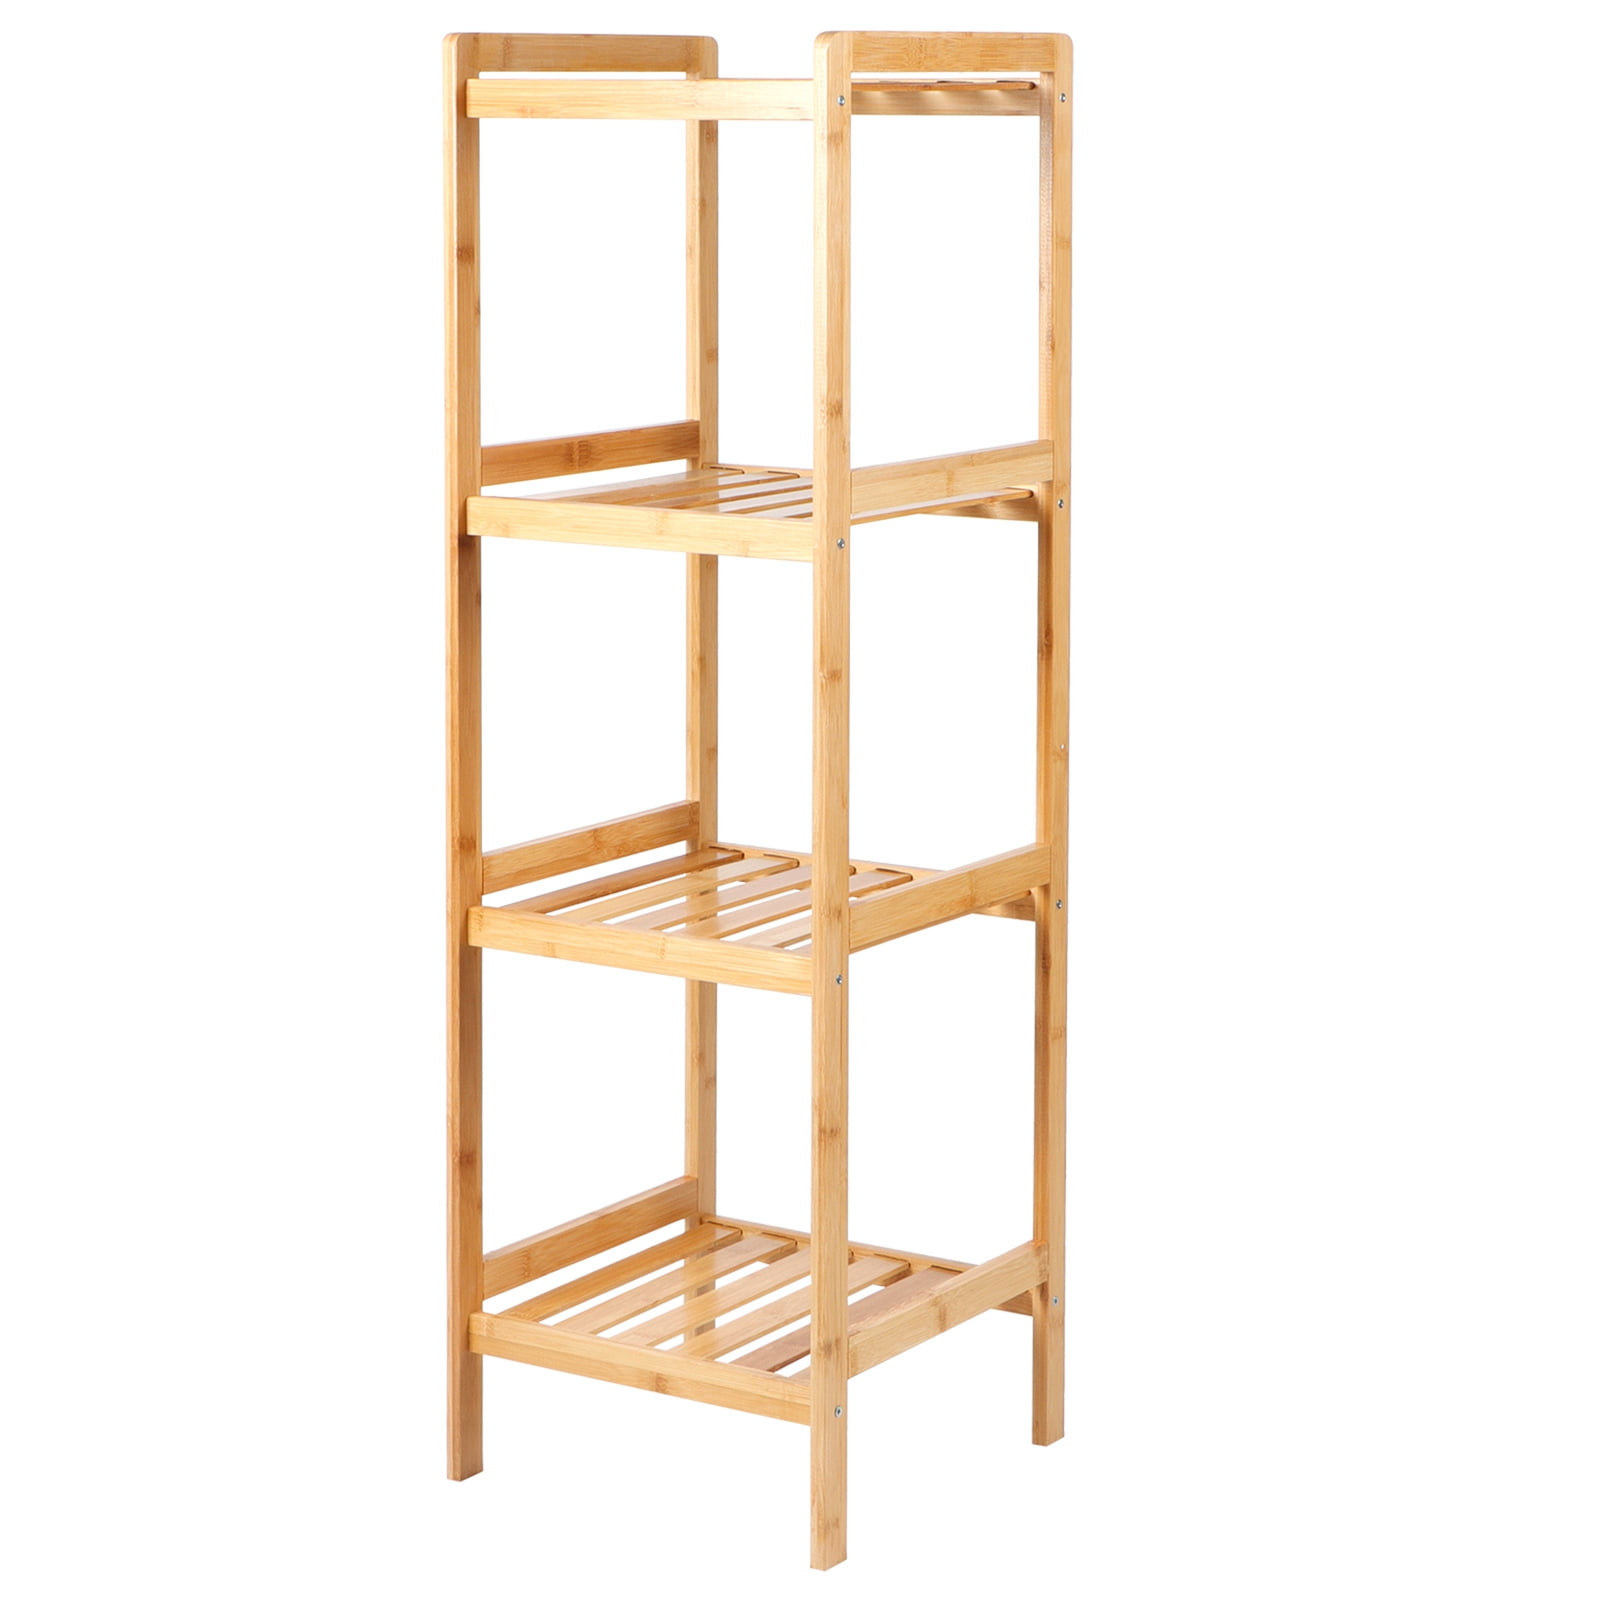 Brrnoo Shelving Unit,Storage Stand,Multi-Functional 4-Tier Bamboo Book Shelf Bathroom Storage Rack Unit Stand Organizer -